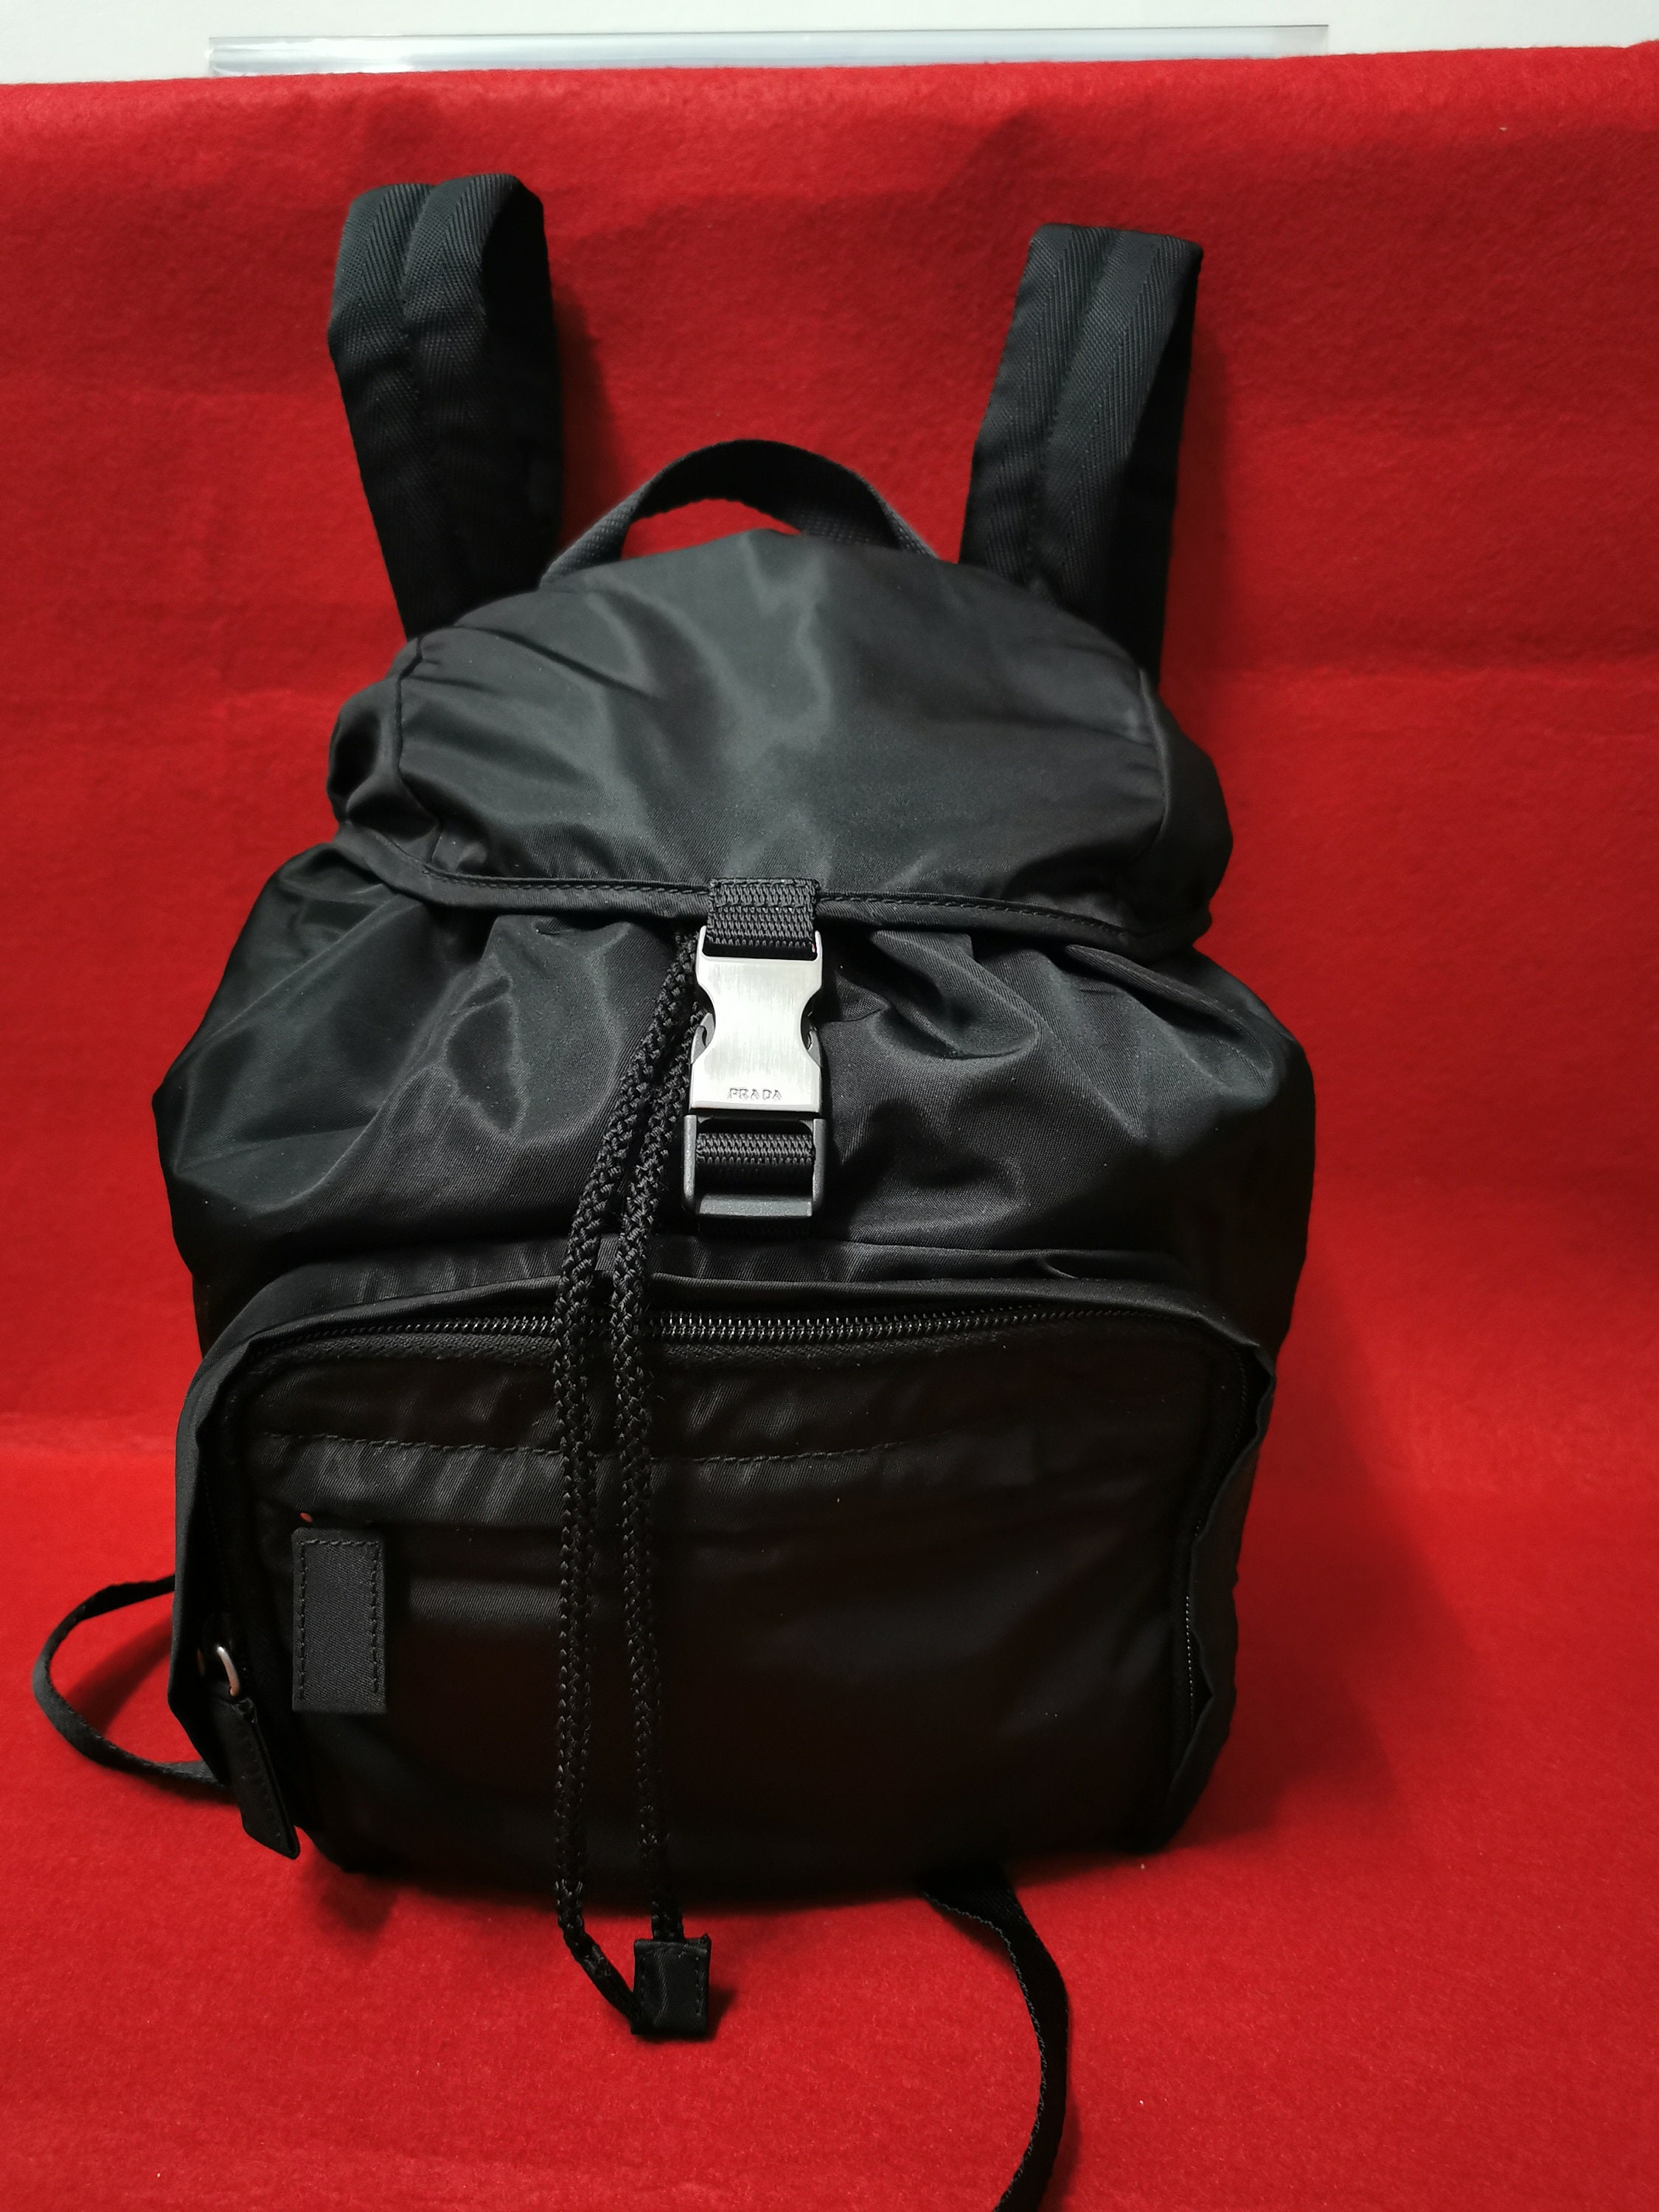 Buy Prada Backpack Online In India - Etsy India